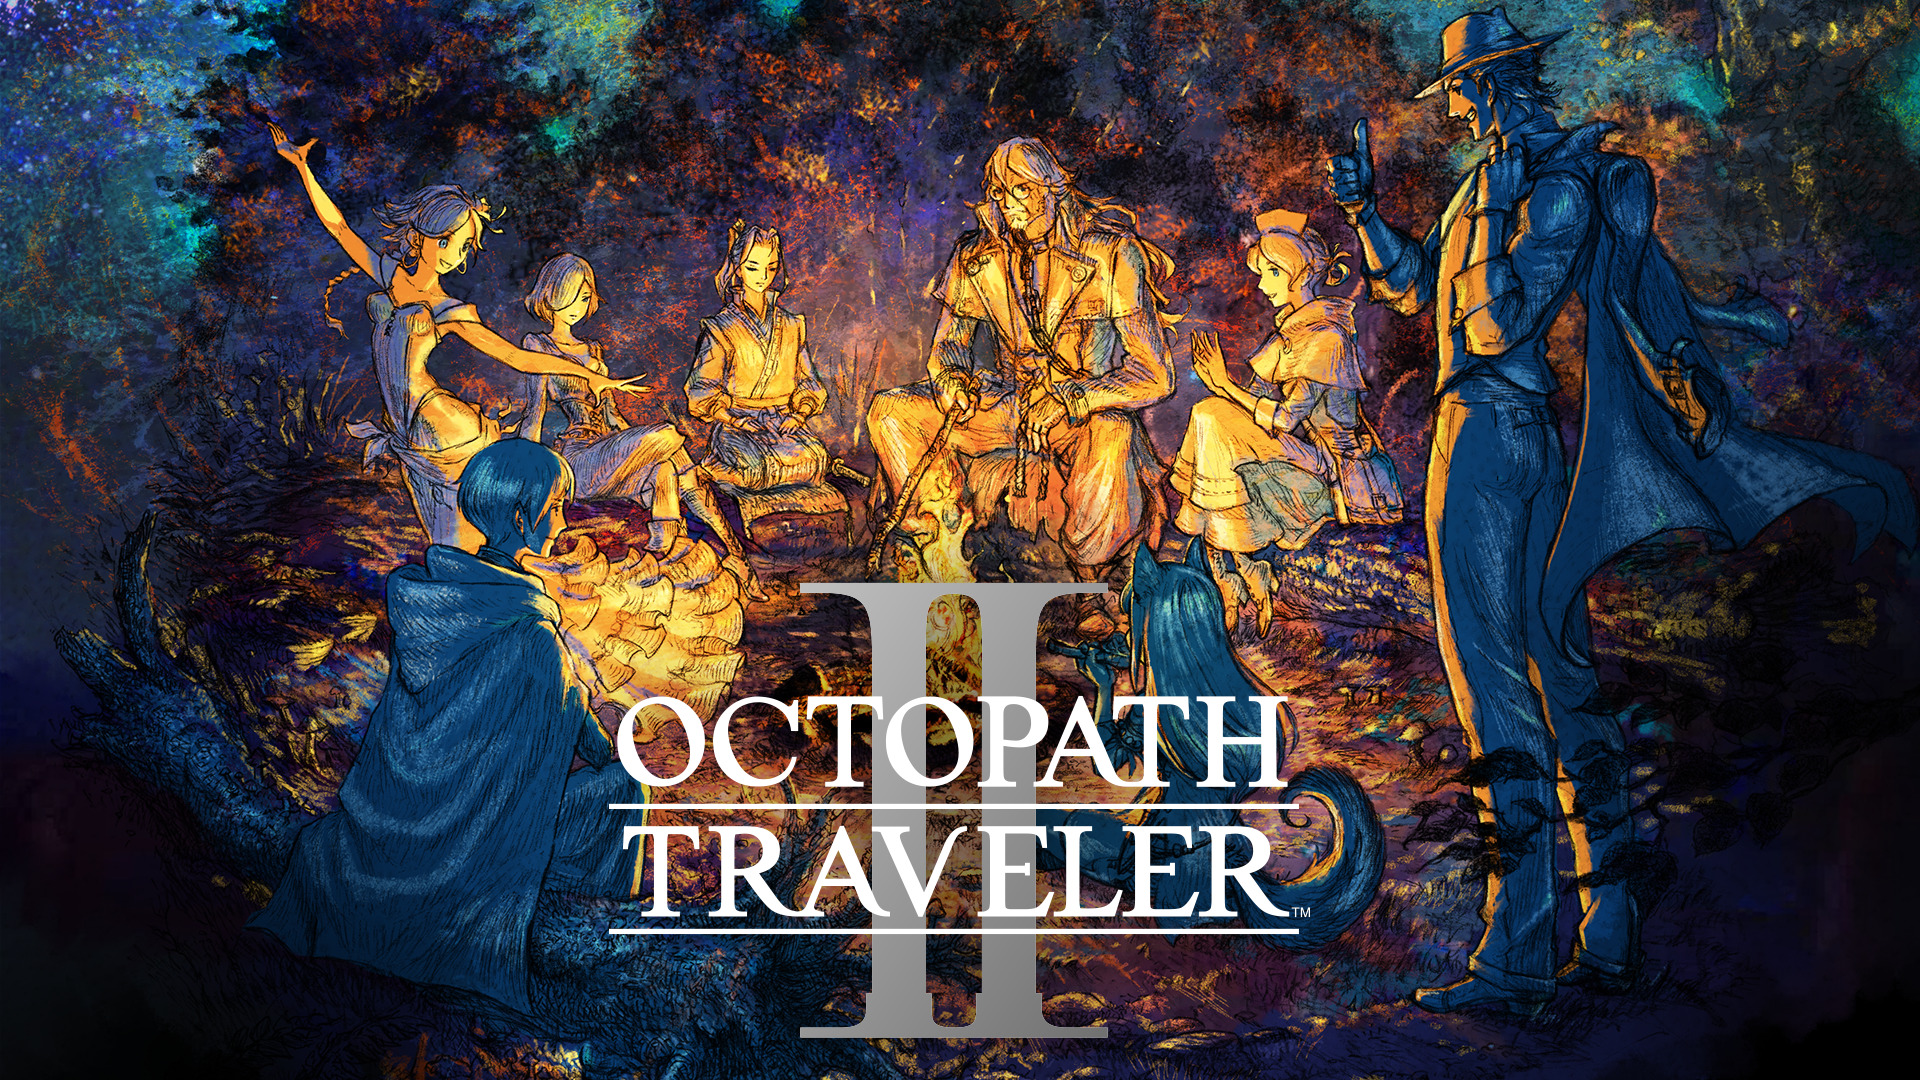 Octopath traveler ii 2022 09 13 22 007 7